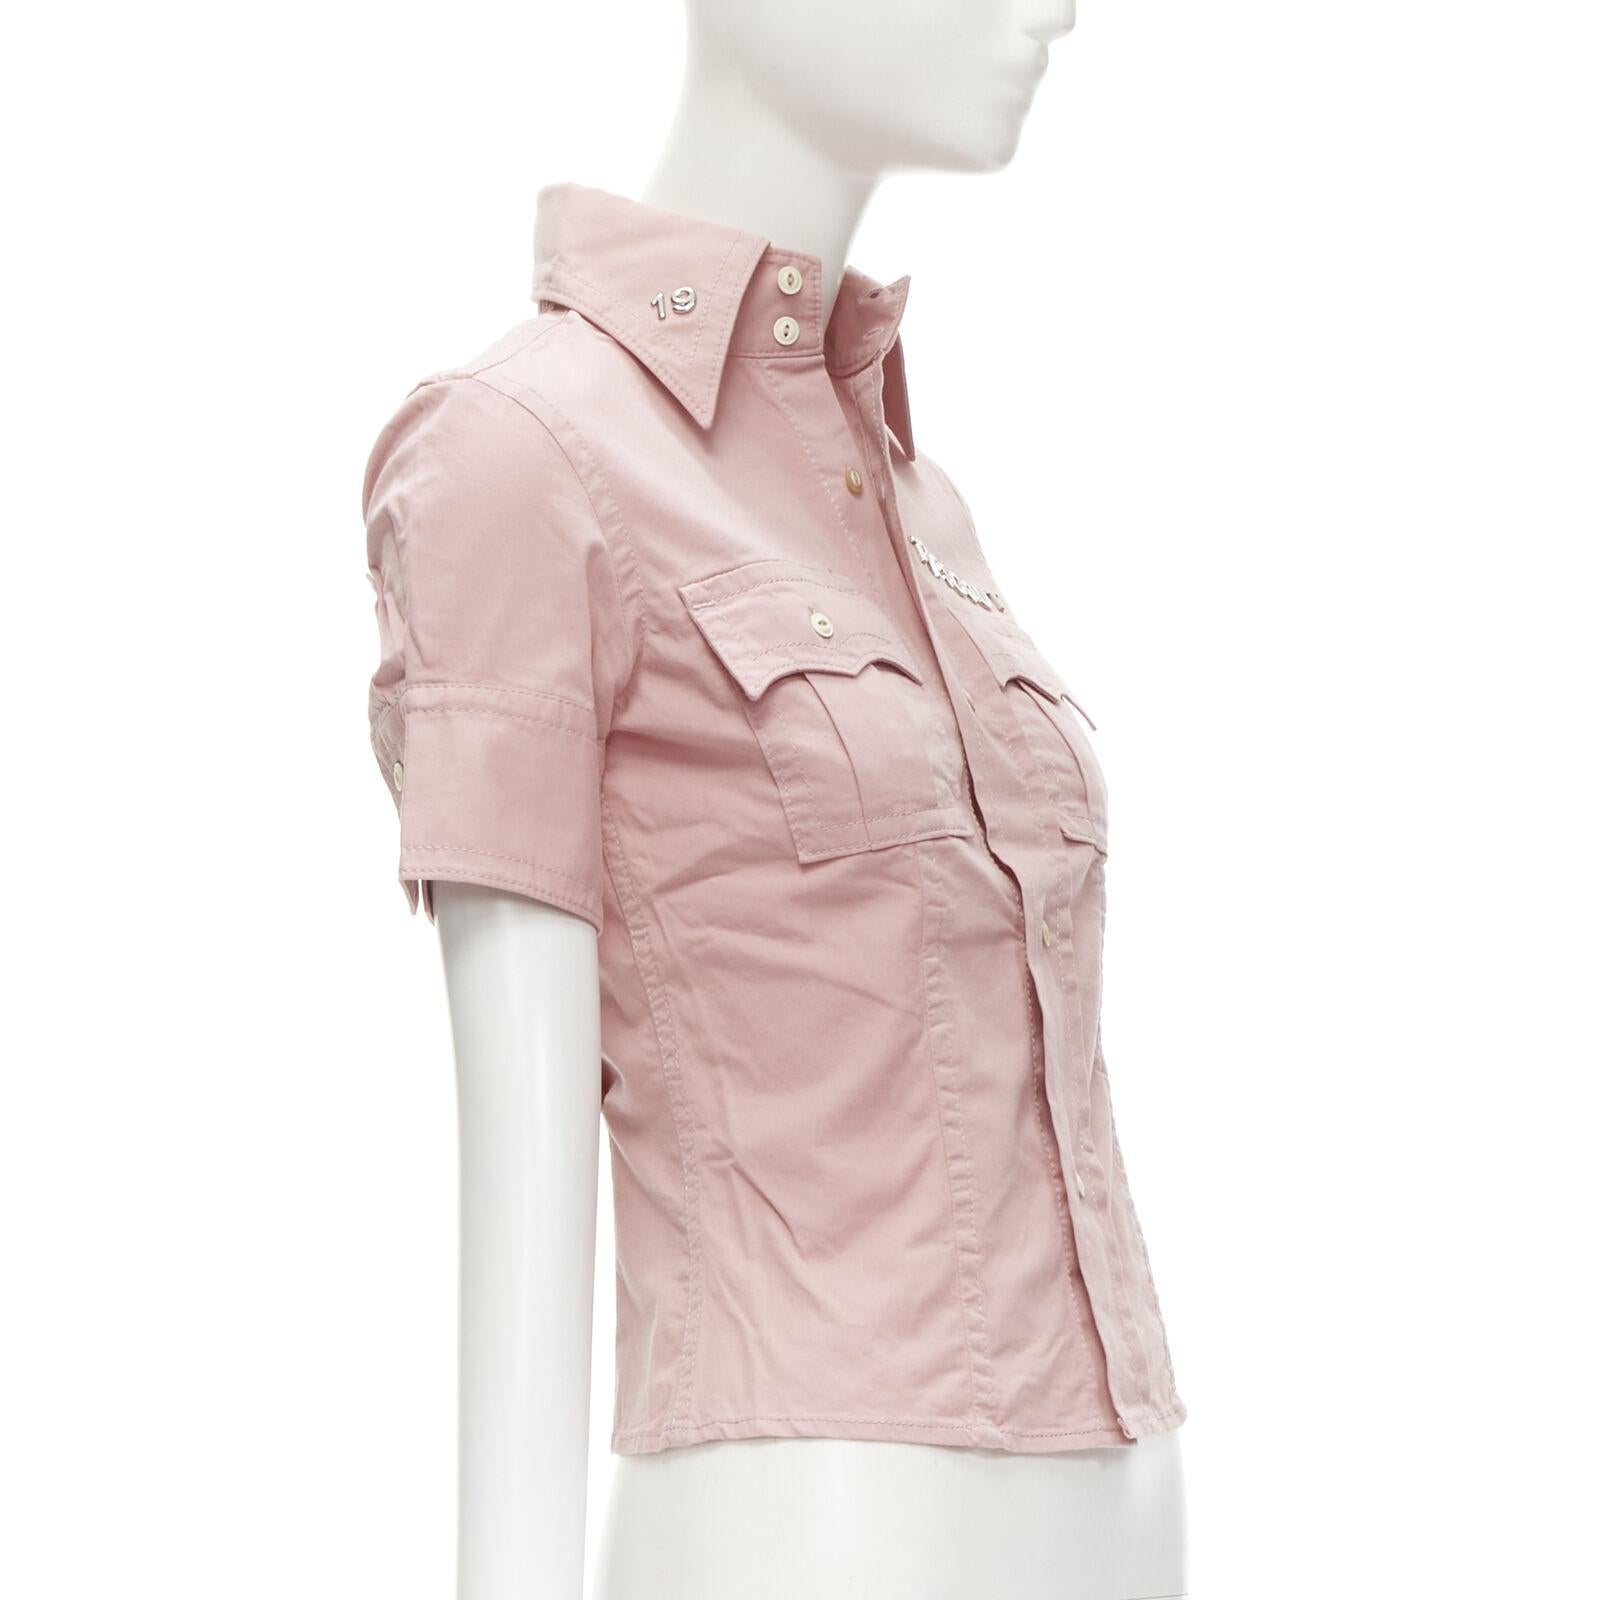 Beige DSQUARED2 Vintage Topscout 1964 pink girl scout uniform shirt IT38 XS